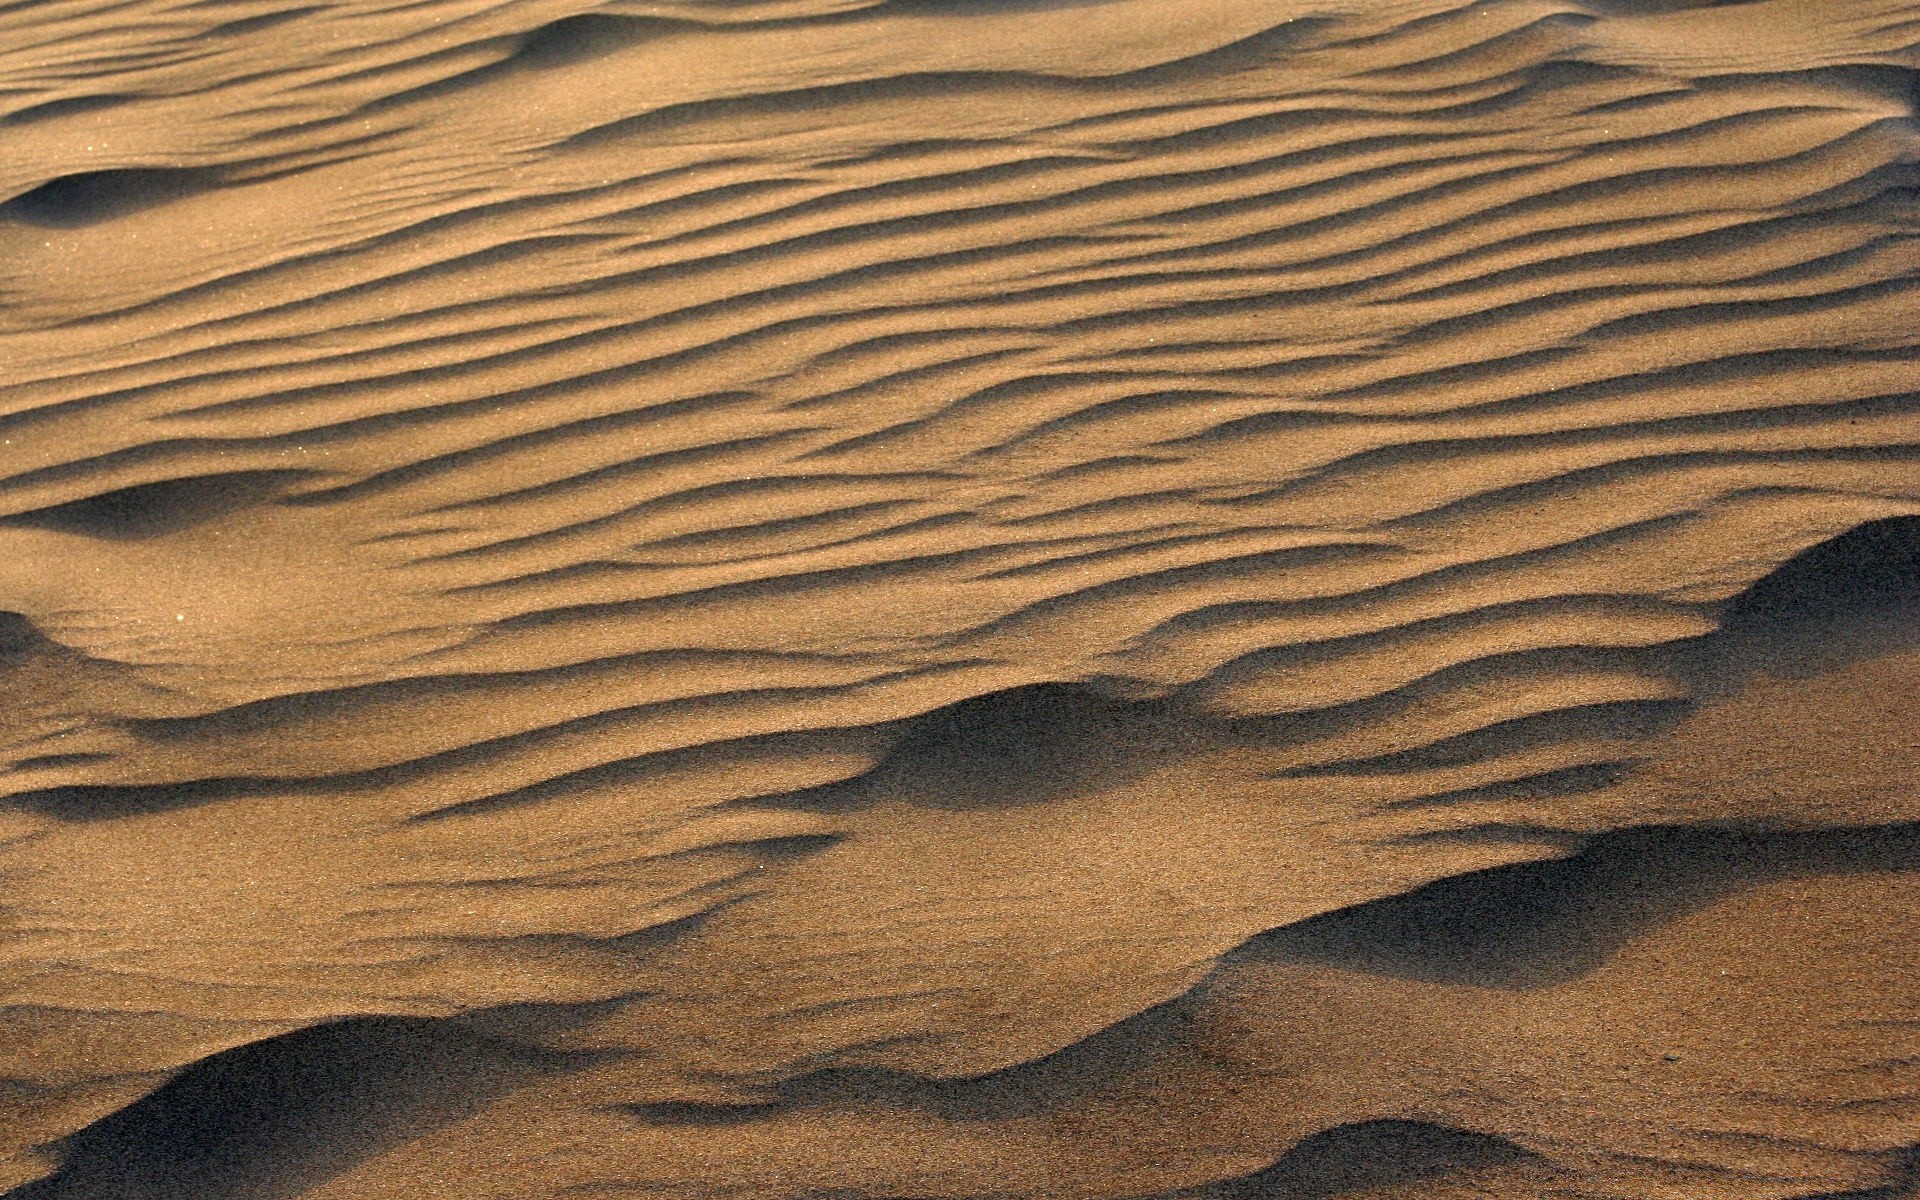 desert sand arid barren dune dry texture adventure pattern beach seashore thirst footprint ripple alone